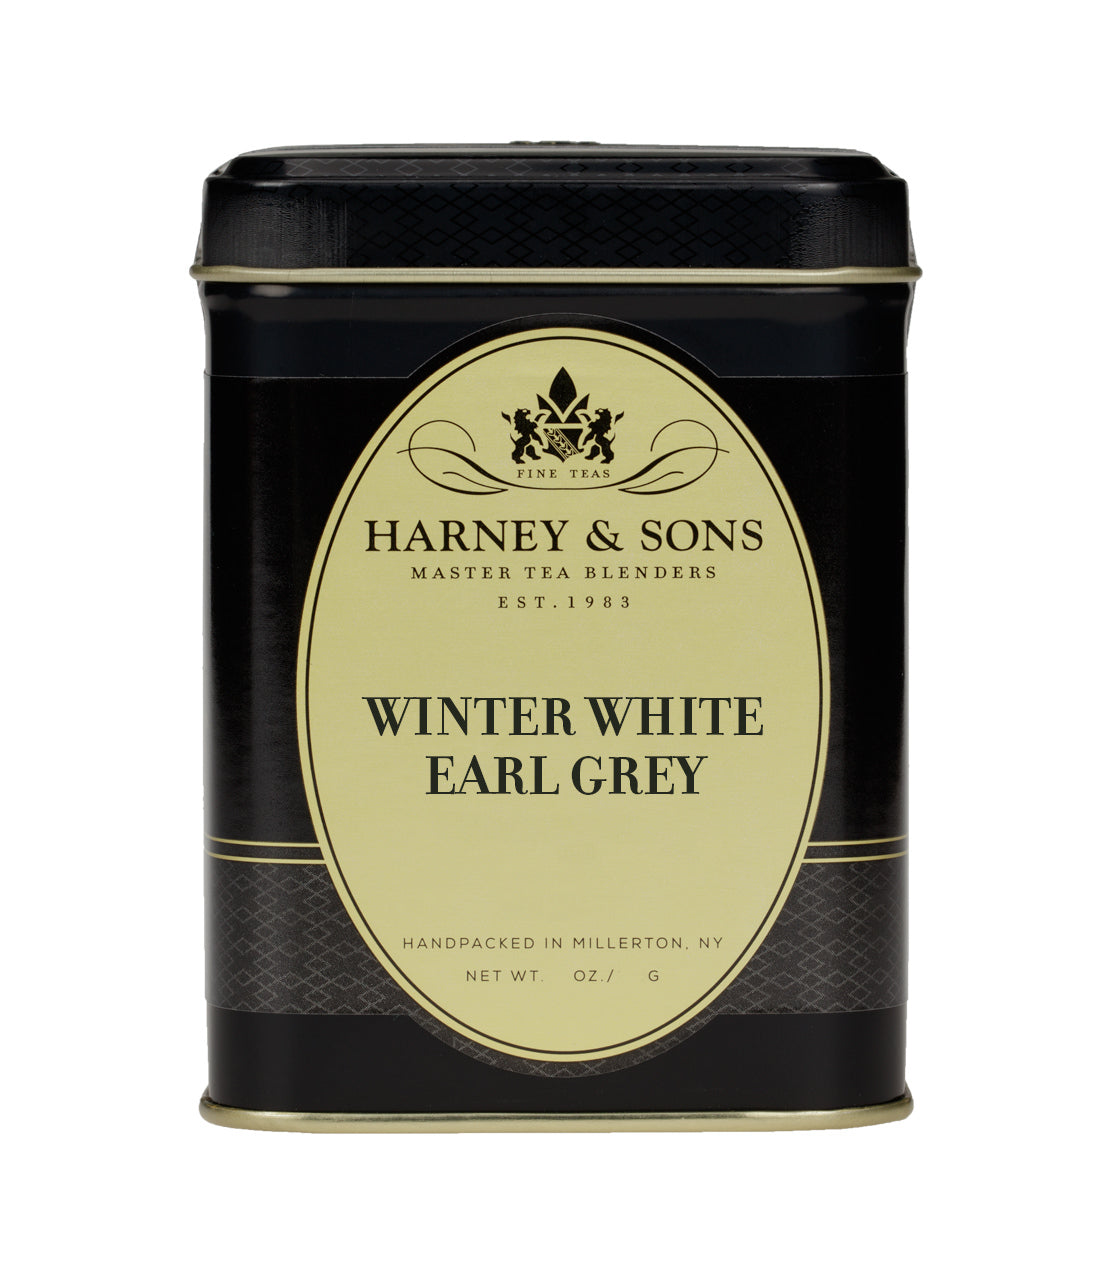 Winter White Earl Grey - Loose 2 oz. Tin - Harney & Sons Fine Teas